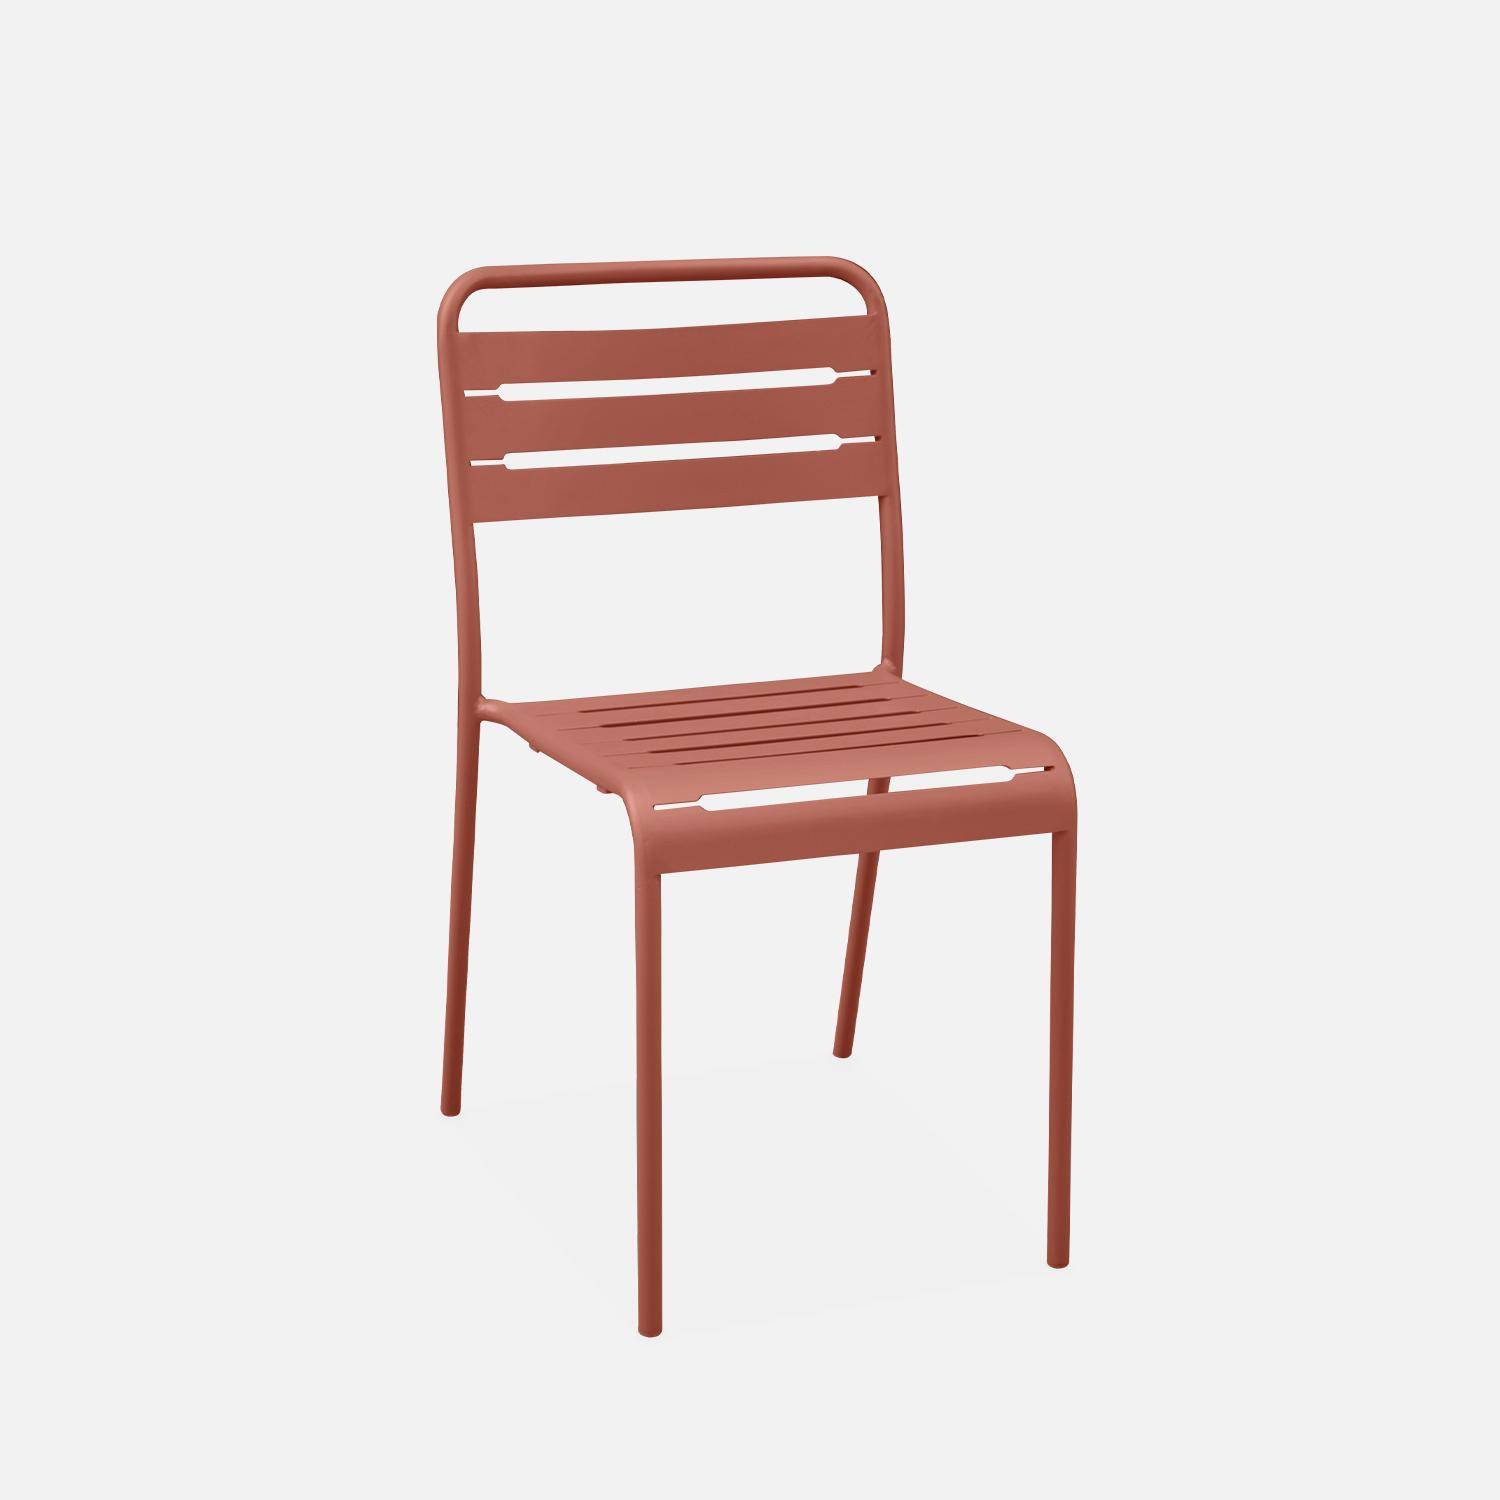 Amélia terracotta metalen tuintafel met 2 stoelen, roestbestendige afwerking,sweeek,Photo6